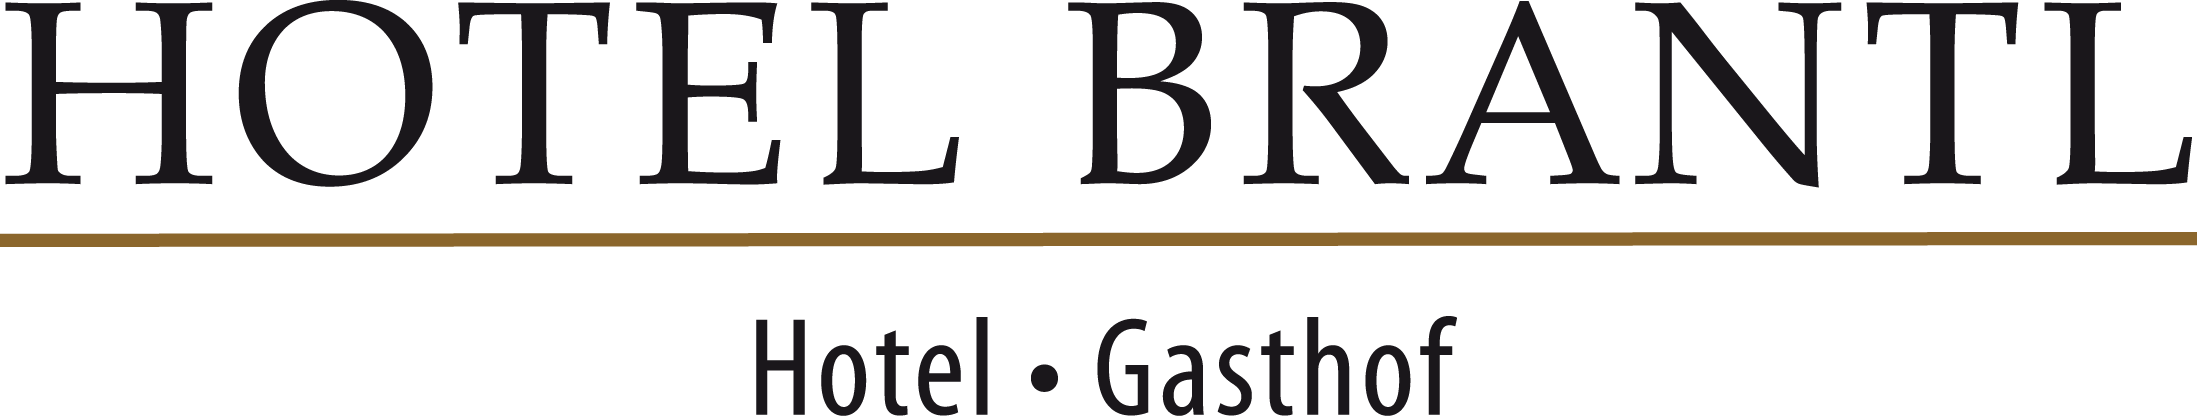  Hotel Brantl 